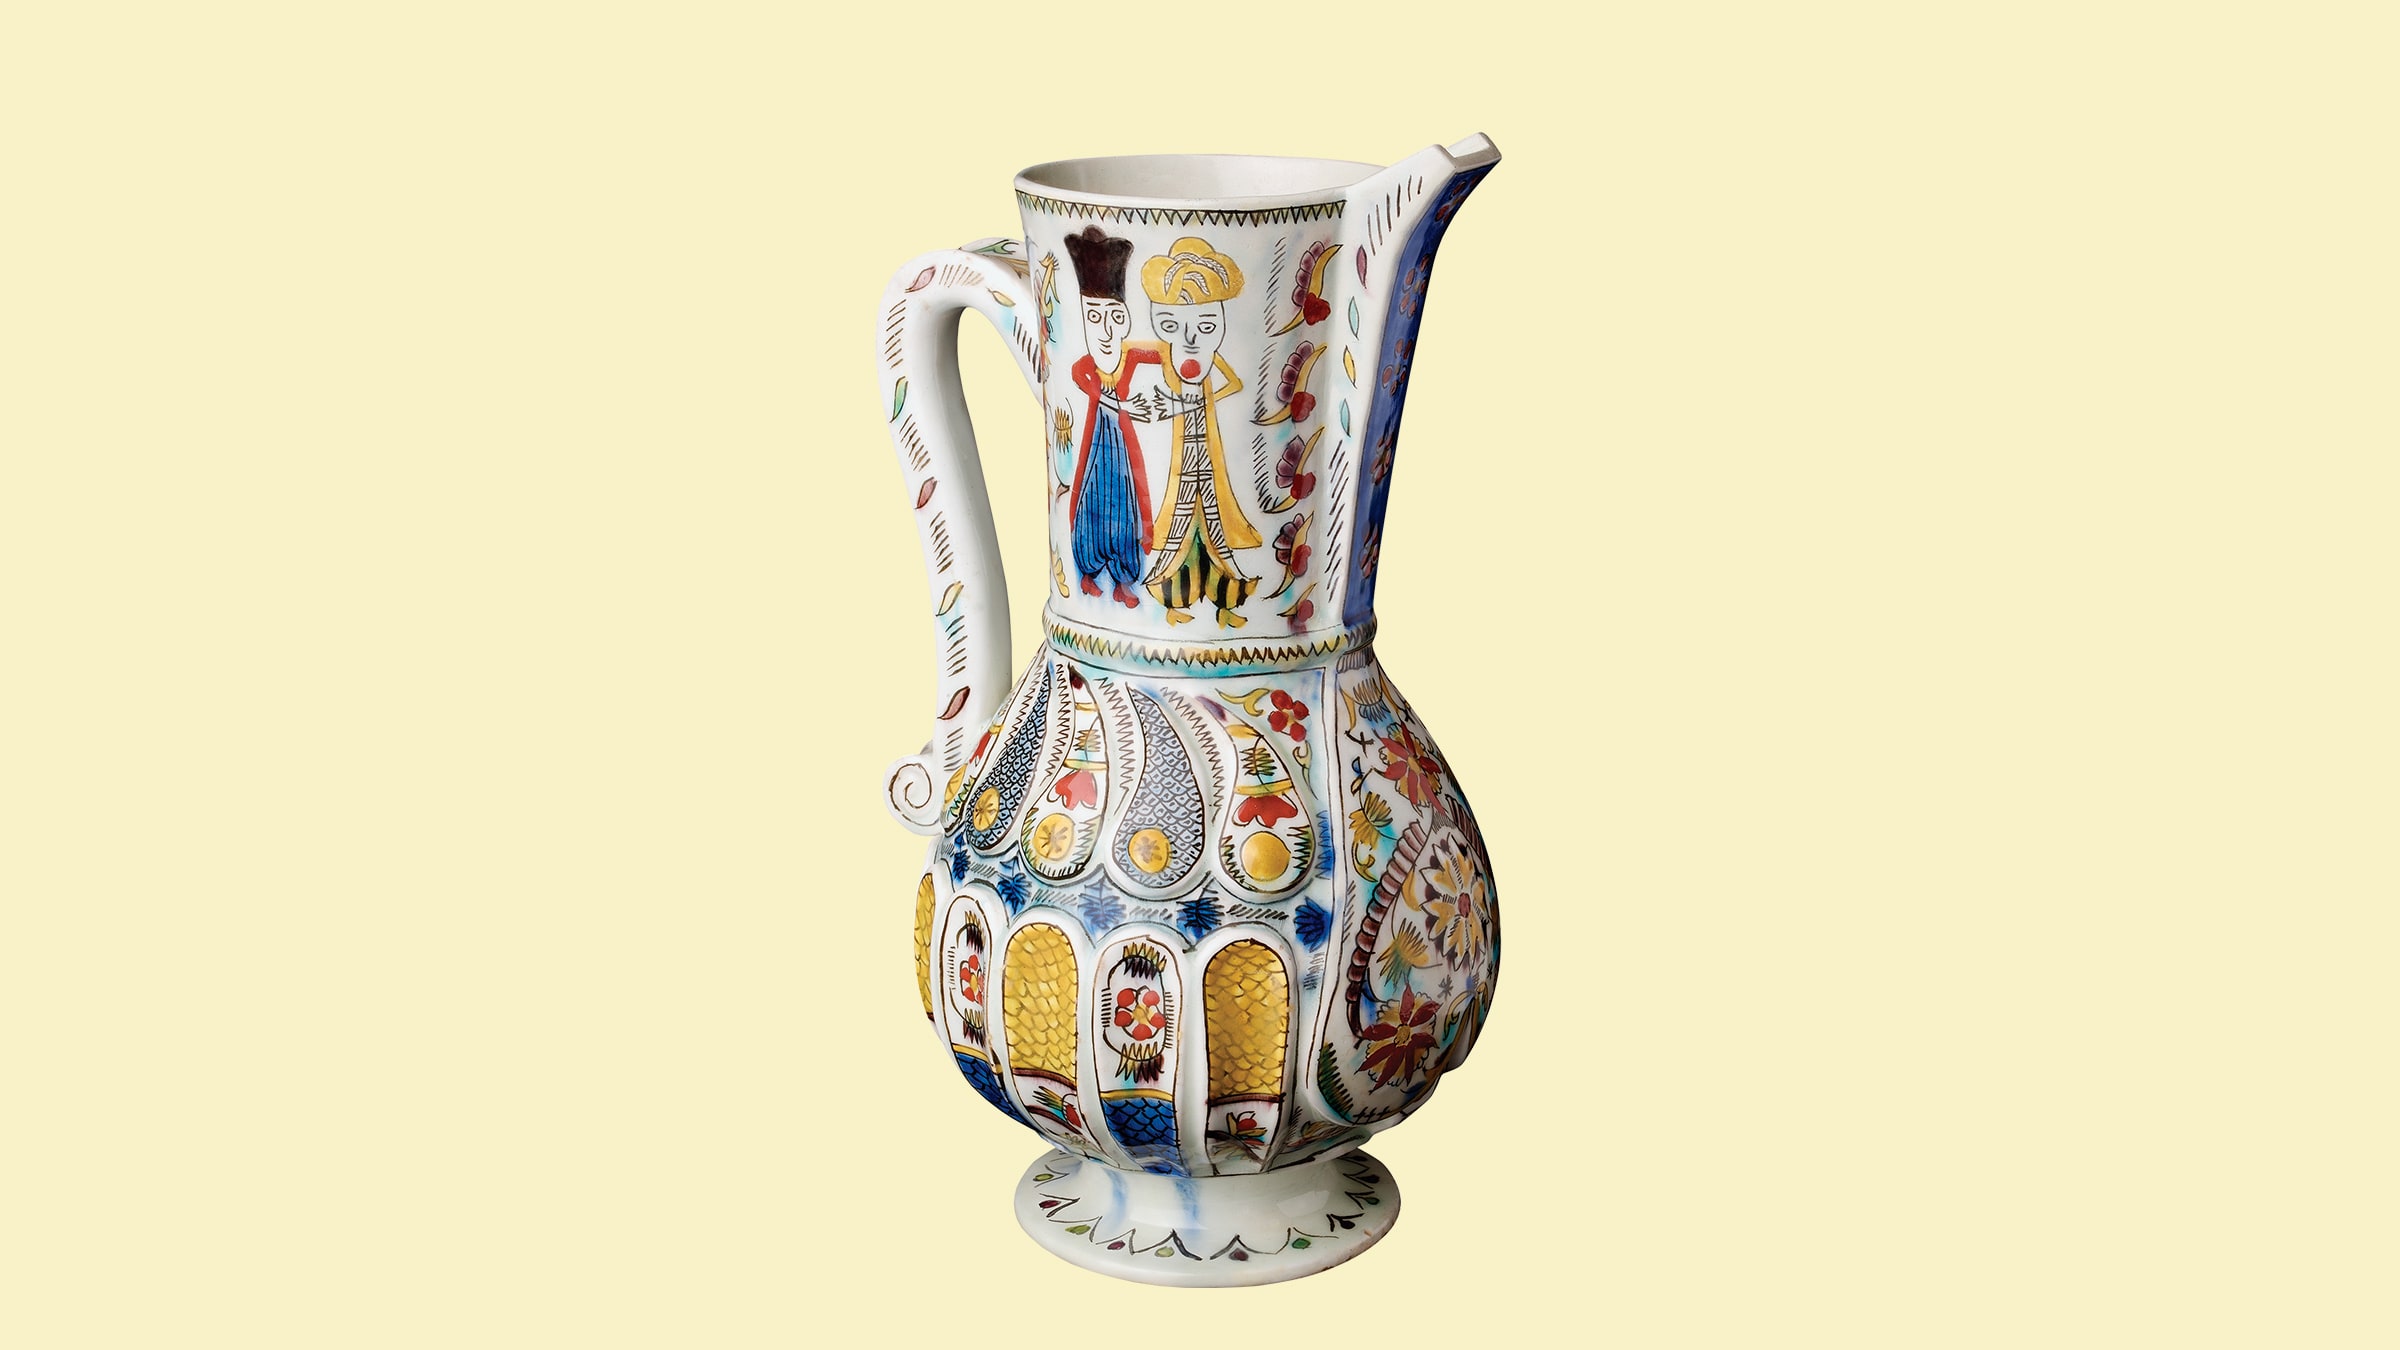 Kütahya Tiles and Ceramics Collection